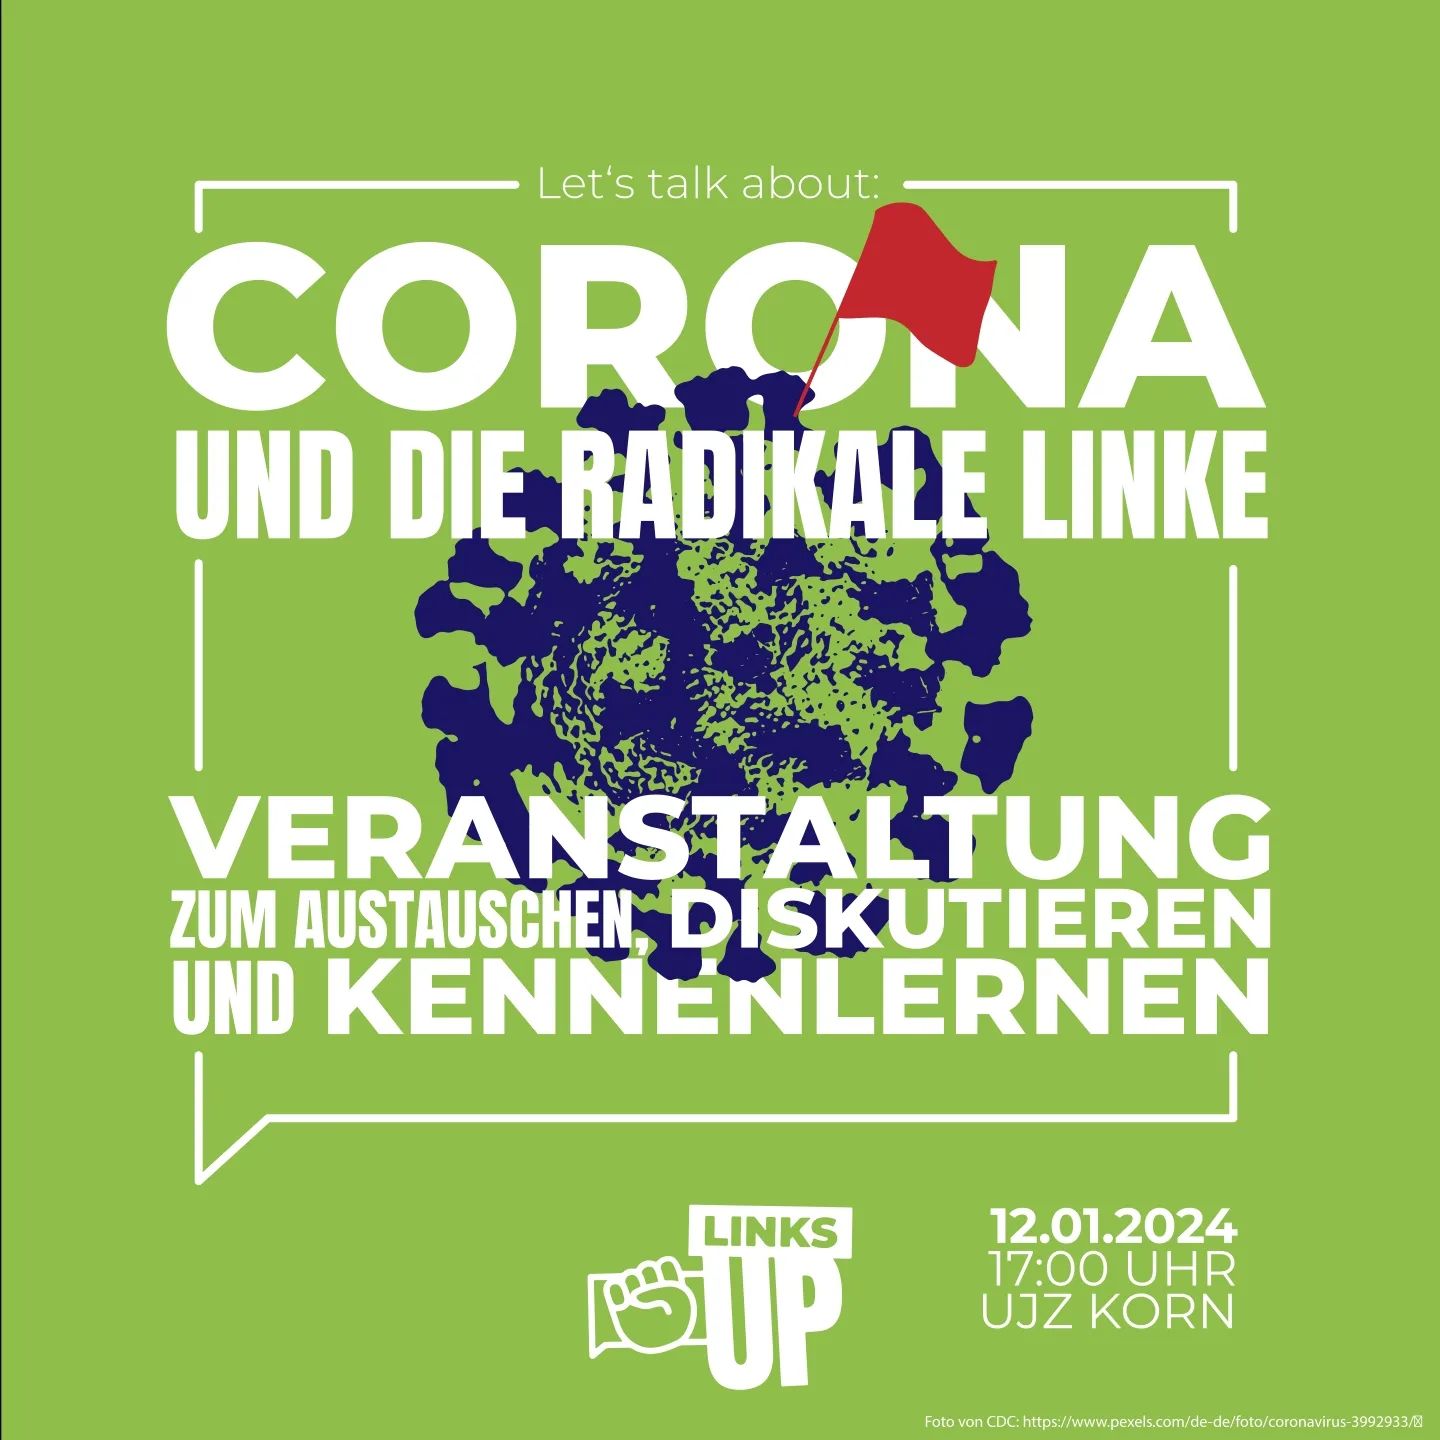 LINKs UP! - Let's talk about Corona und die radikale Linke